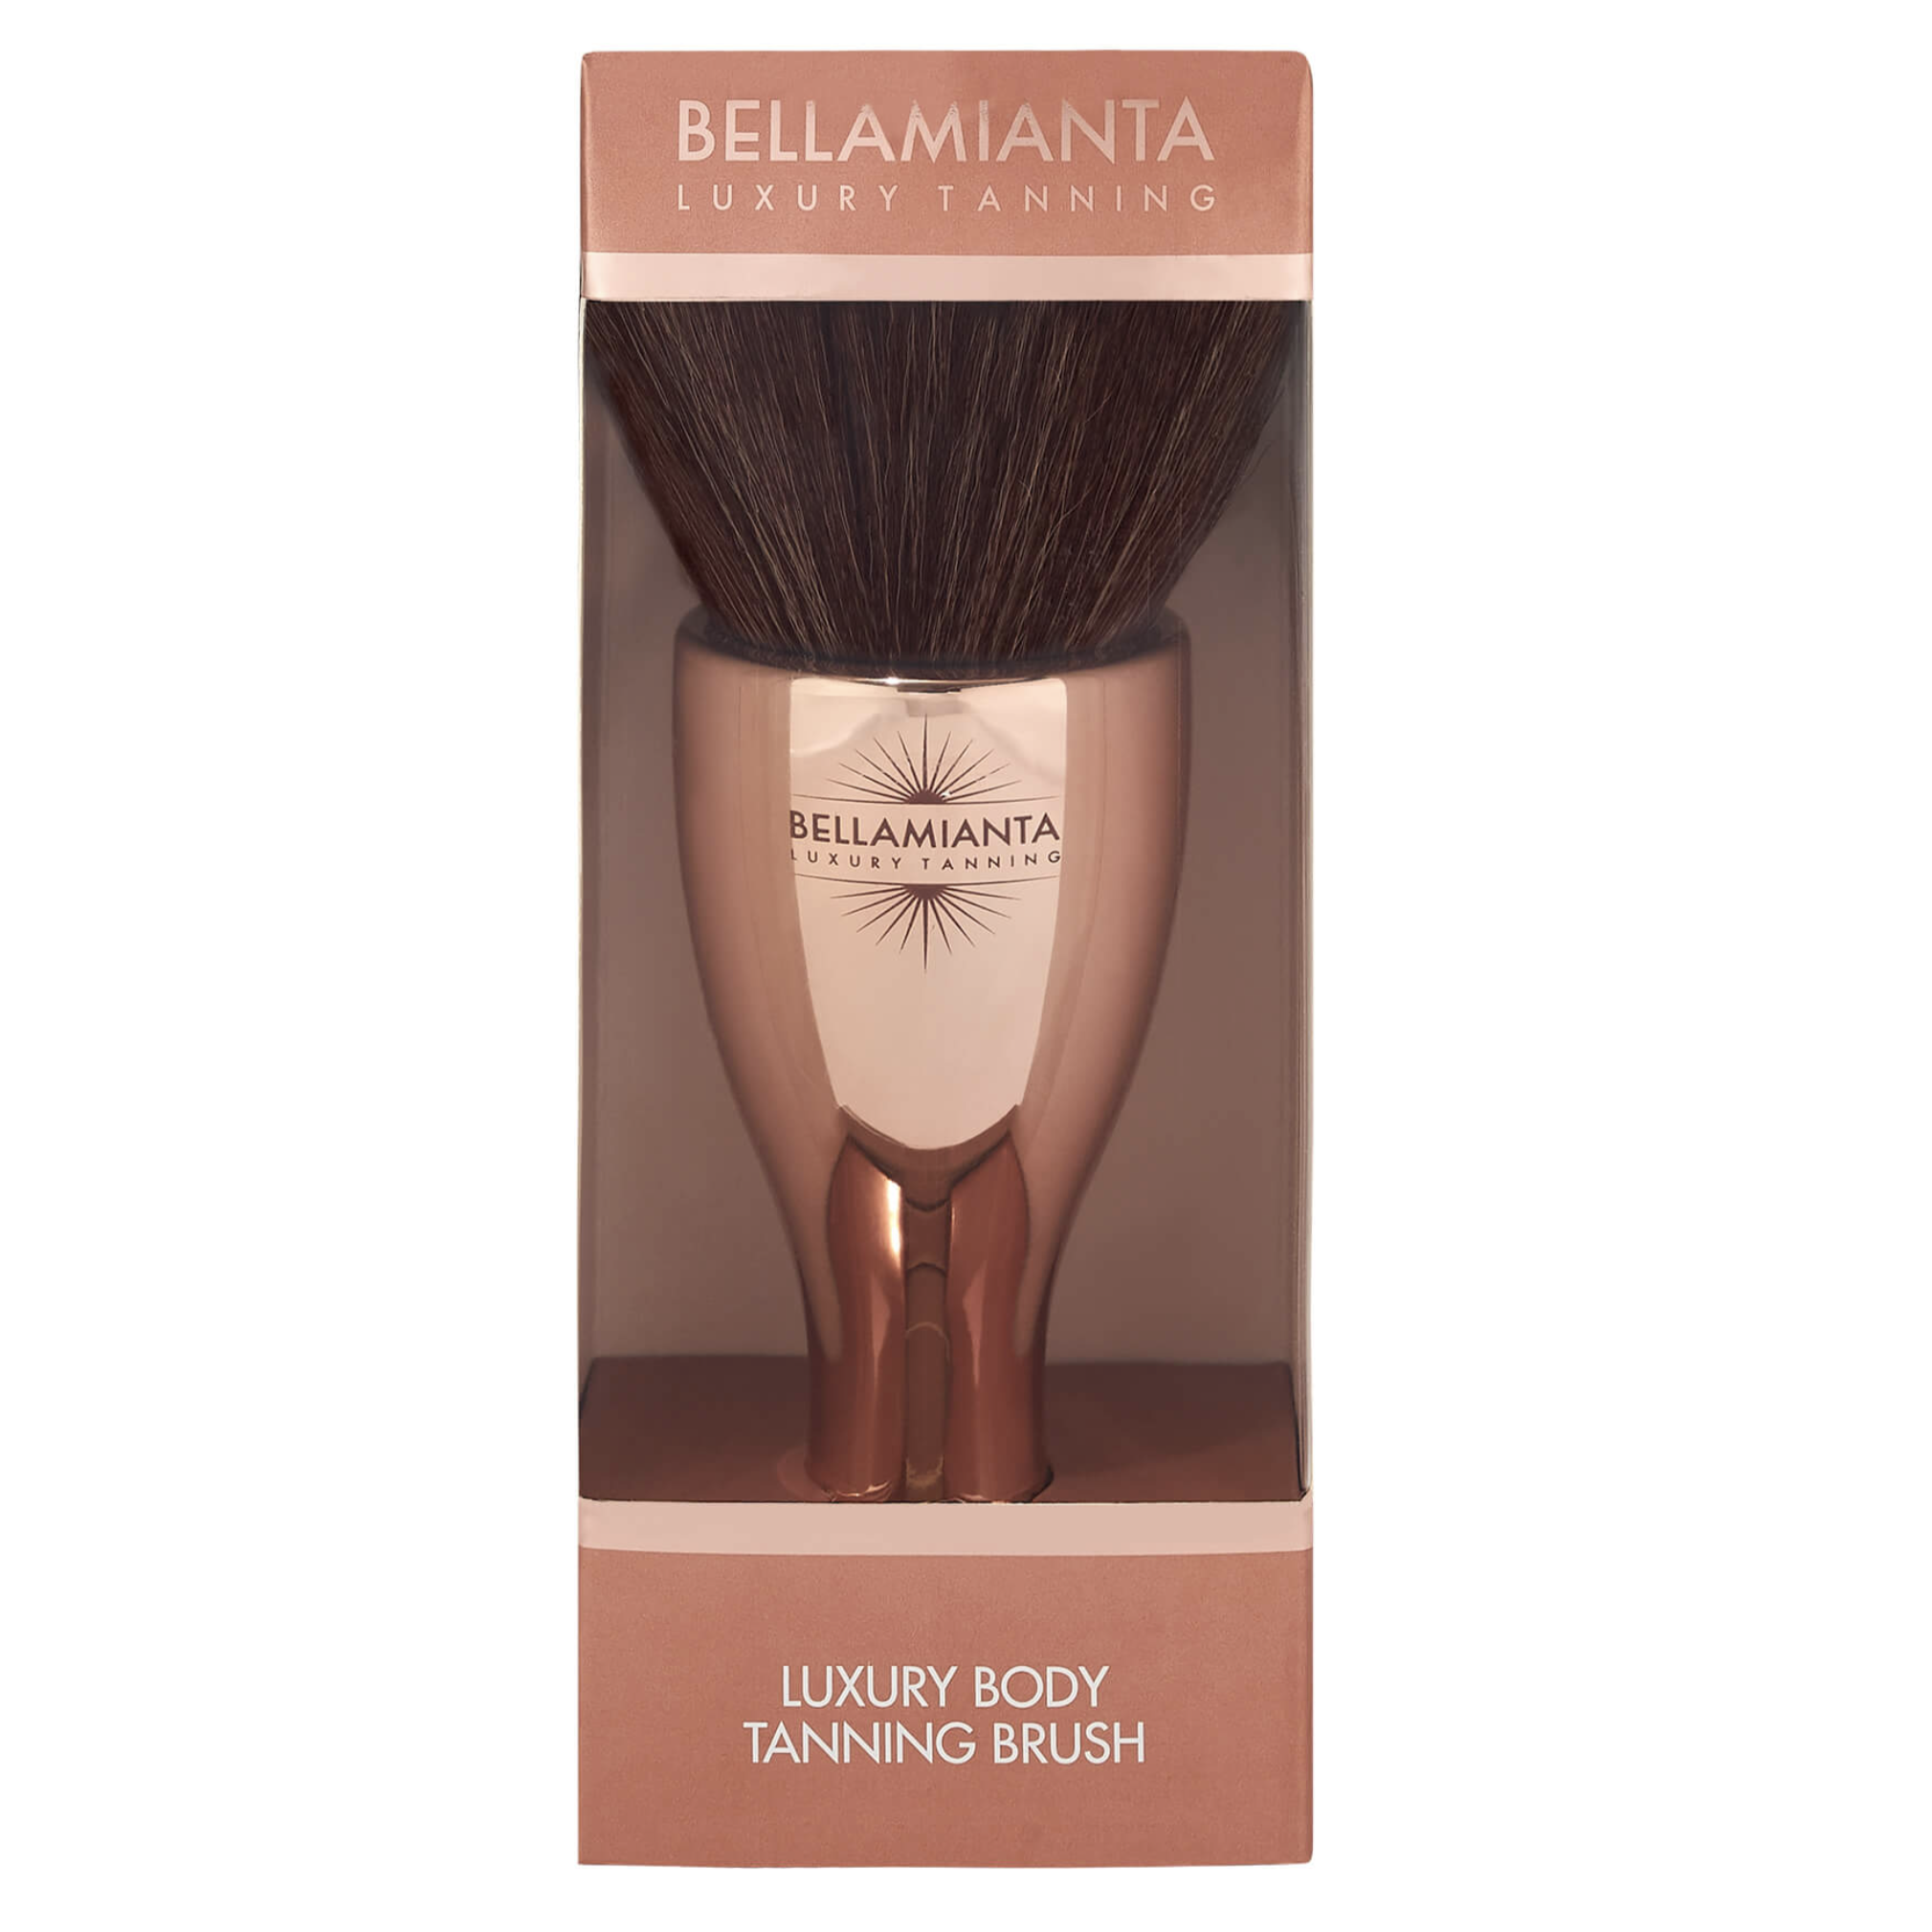 BELLAMIANTA Luxury Body Tanning Brush , in packaging